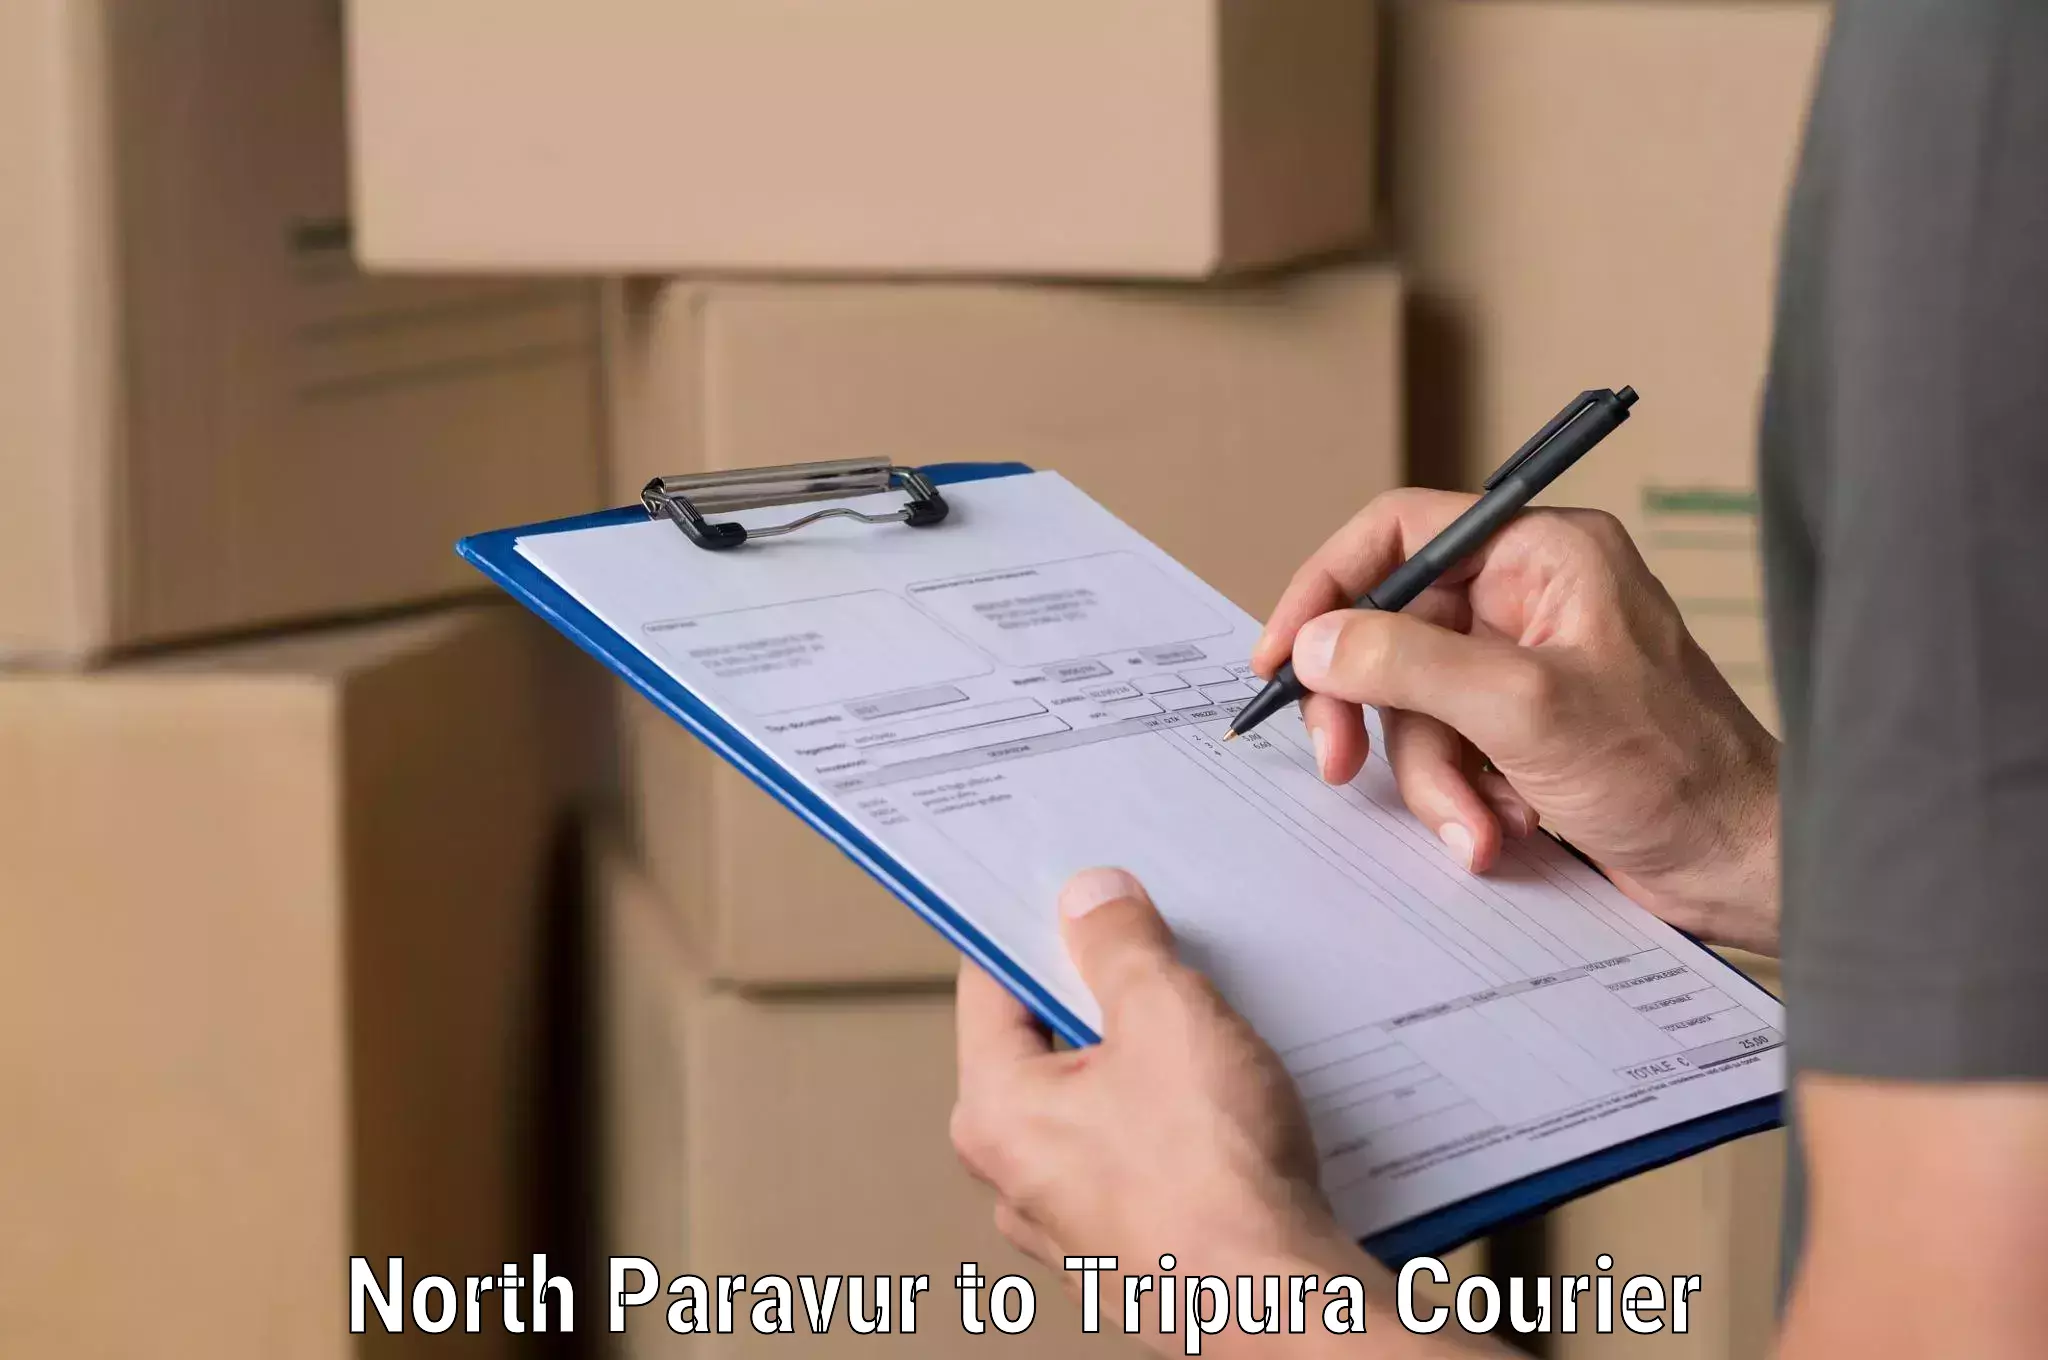 Bulk shipping discounts North Paravur to Udaipur Tripura